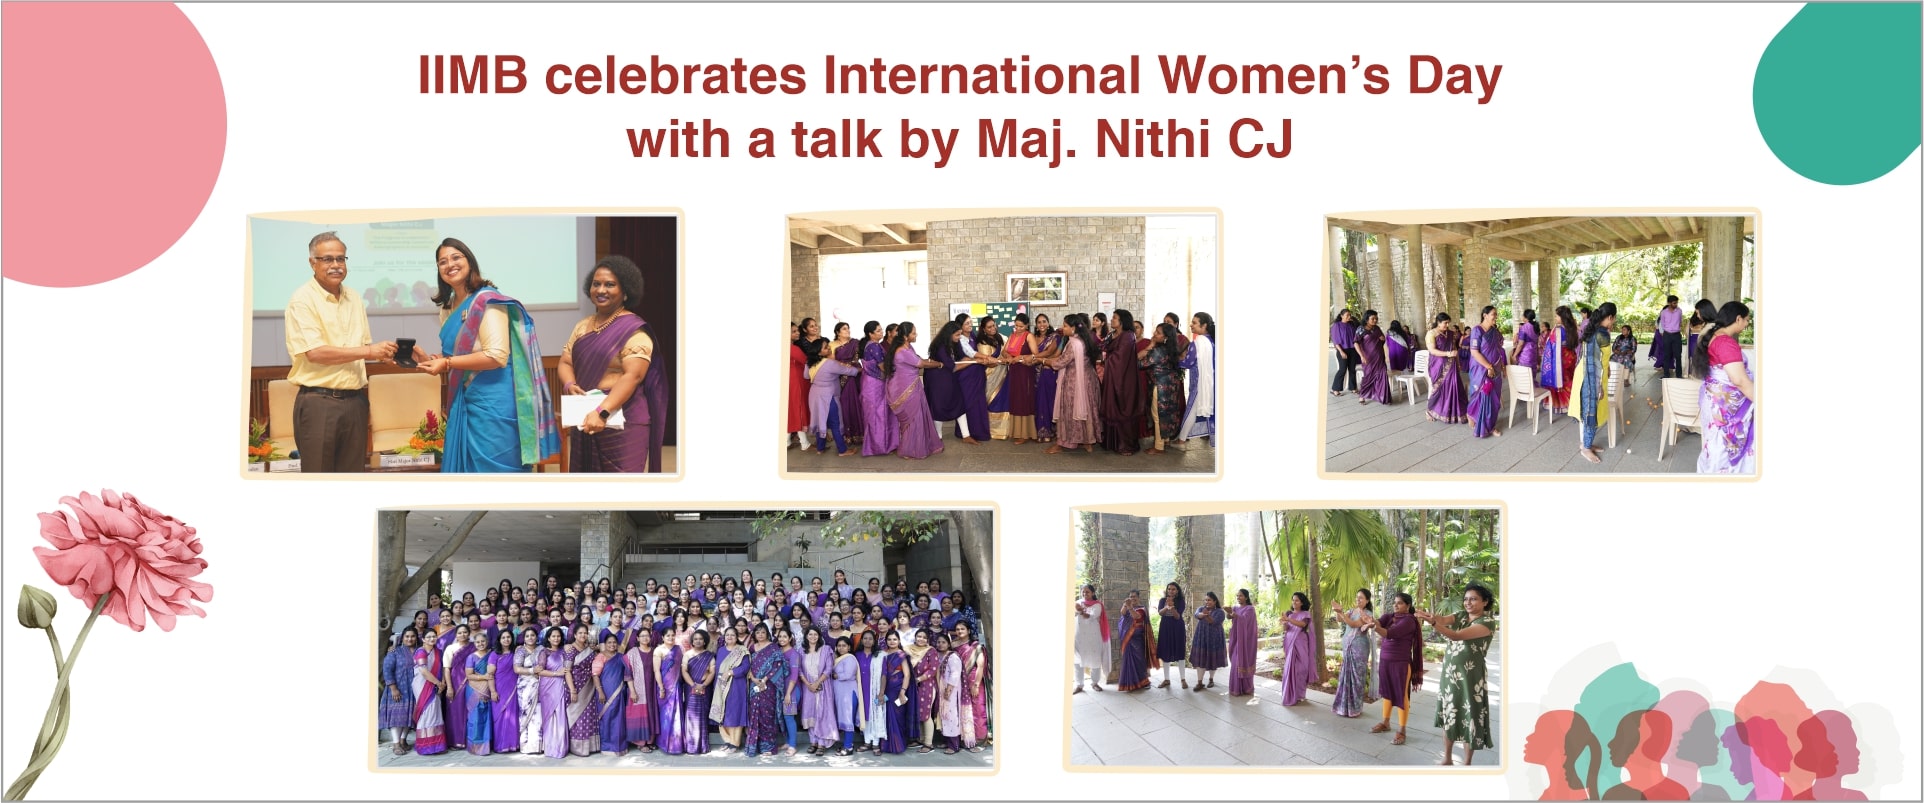 IIMB celebrates International Women’s Day with a talk by Maj. Nithi CJ